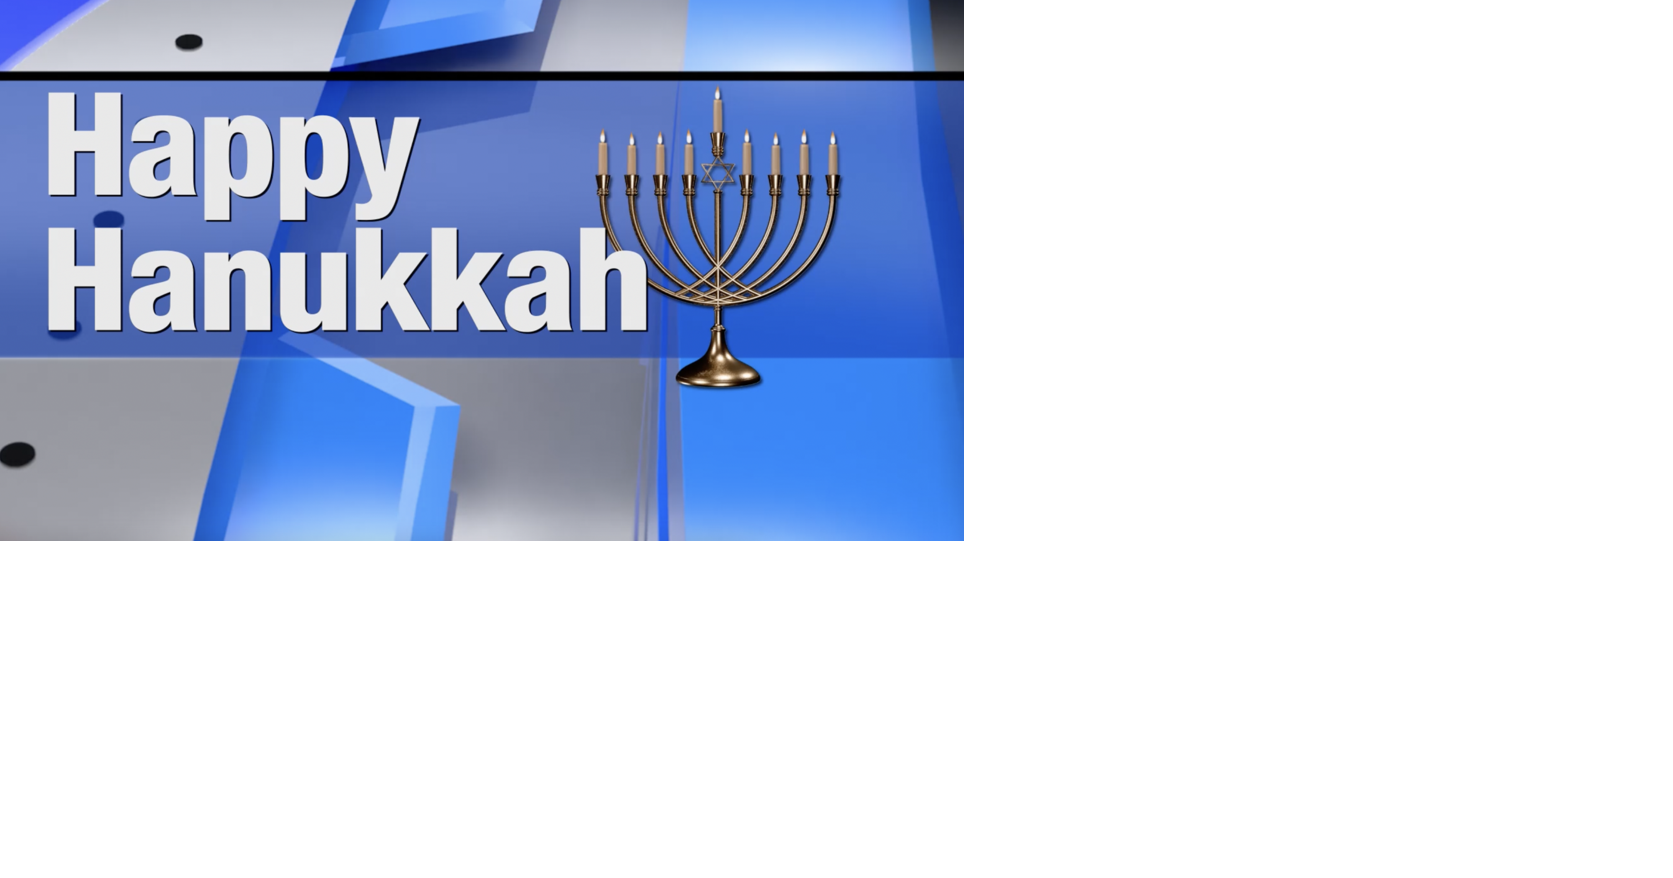 Hanukkah begins at sundown, and community celebrations abound